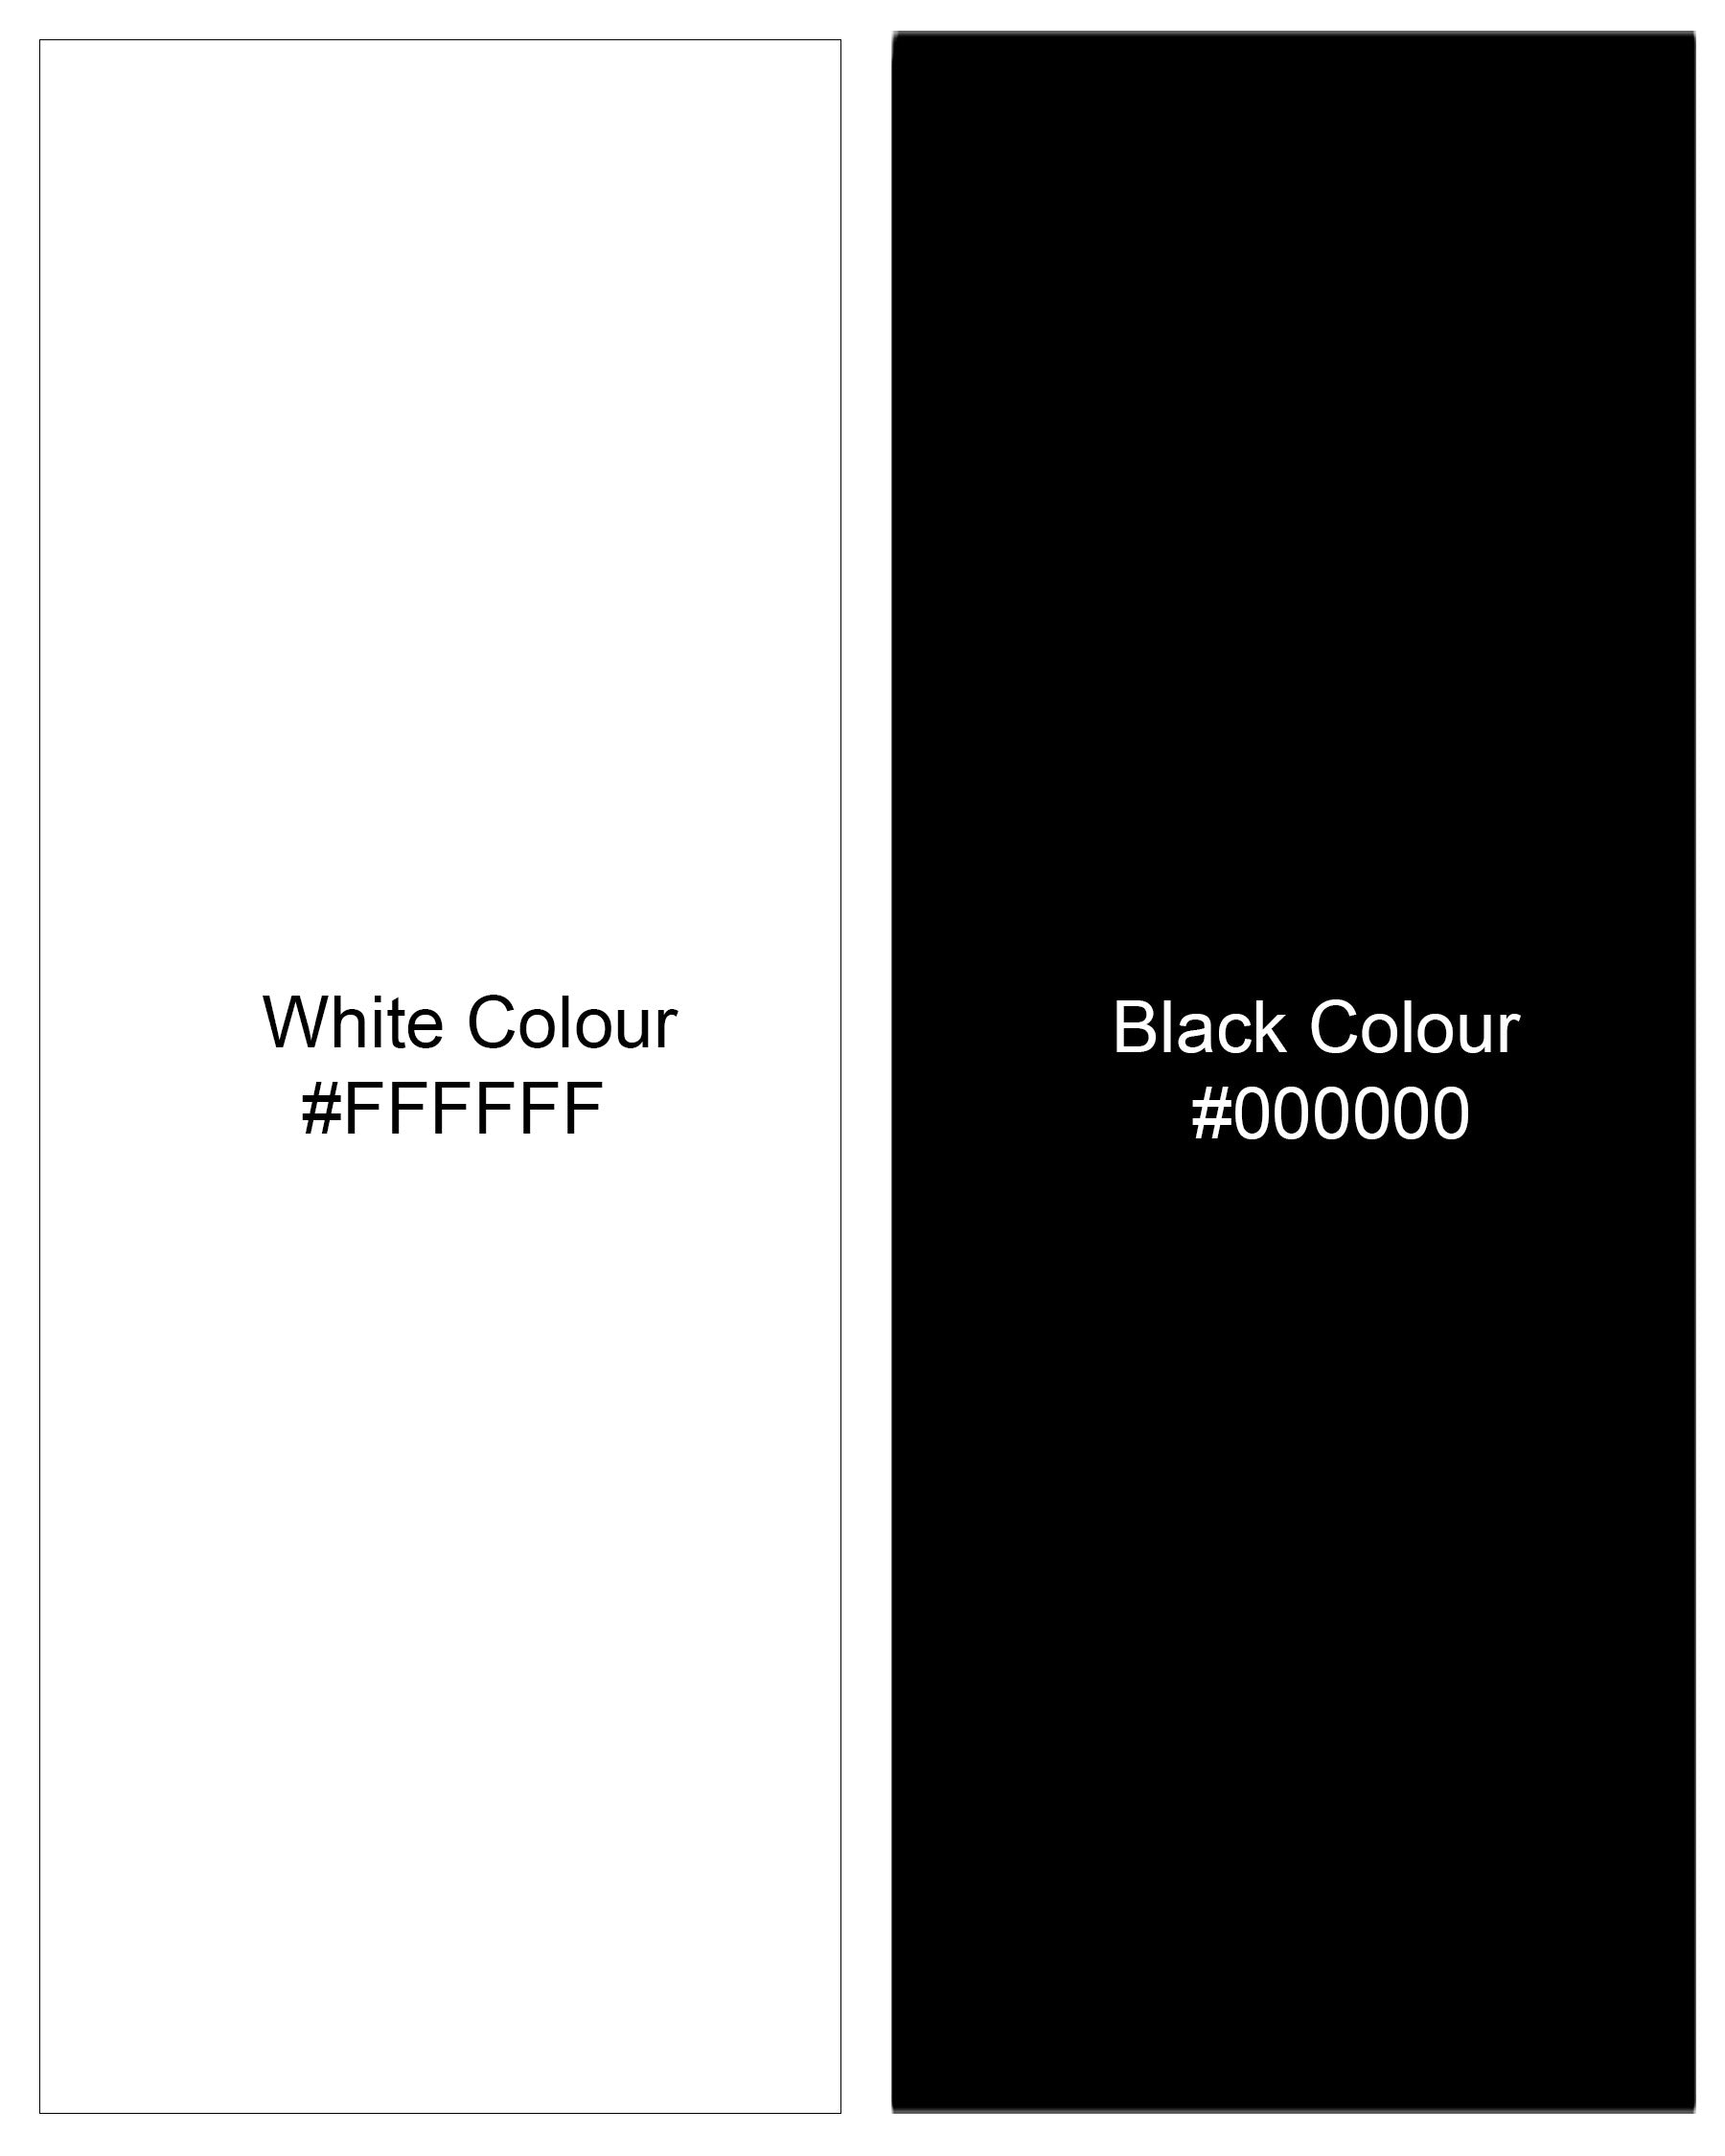 Jade Black and White Twill Plaid Premium Cotton Shirt 8300-BLK -38,8300-BLK -H-38,8300-BLK -39,8300-BLK -H-39,8300-BLK -40,8300-BLK -H-40,8300-BLK -42,8300-BLK -H-42,8300-BLK -44,8300-BLK -H-44,8300-BLK -46,8300-BLK -H-46,8300-BLK -48,8300-BLK -H-48,8300-BLK -50,8300-BLK -H-50,8300-BLK -52,8300-BLK -H-52